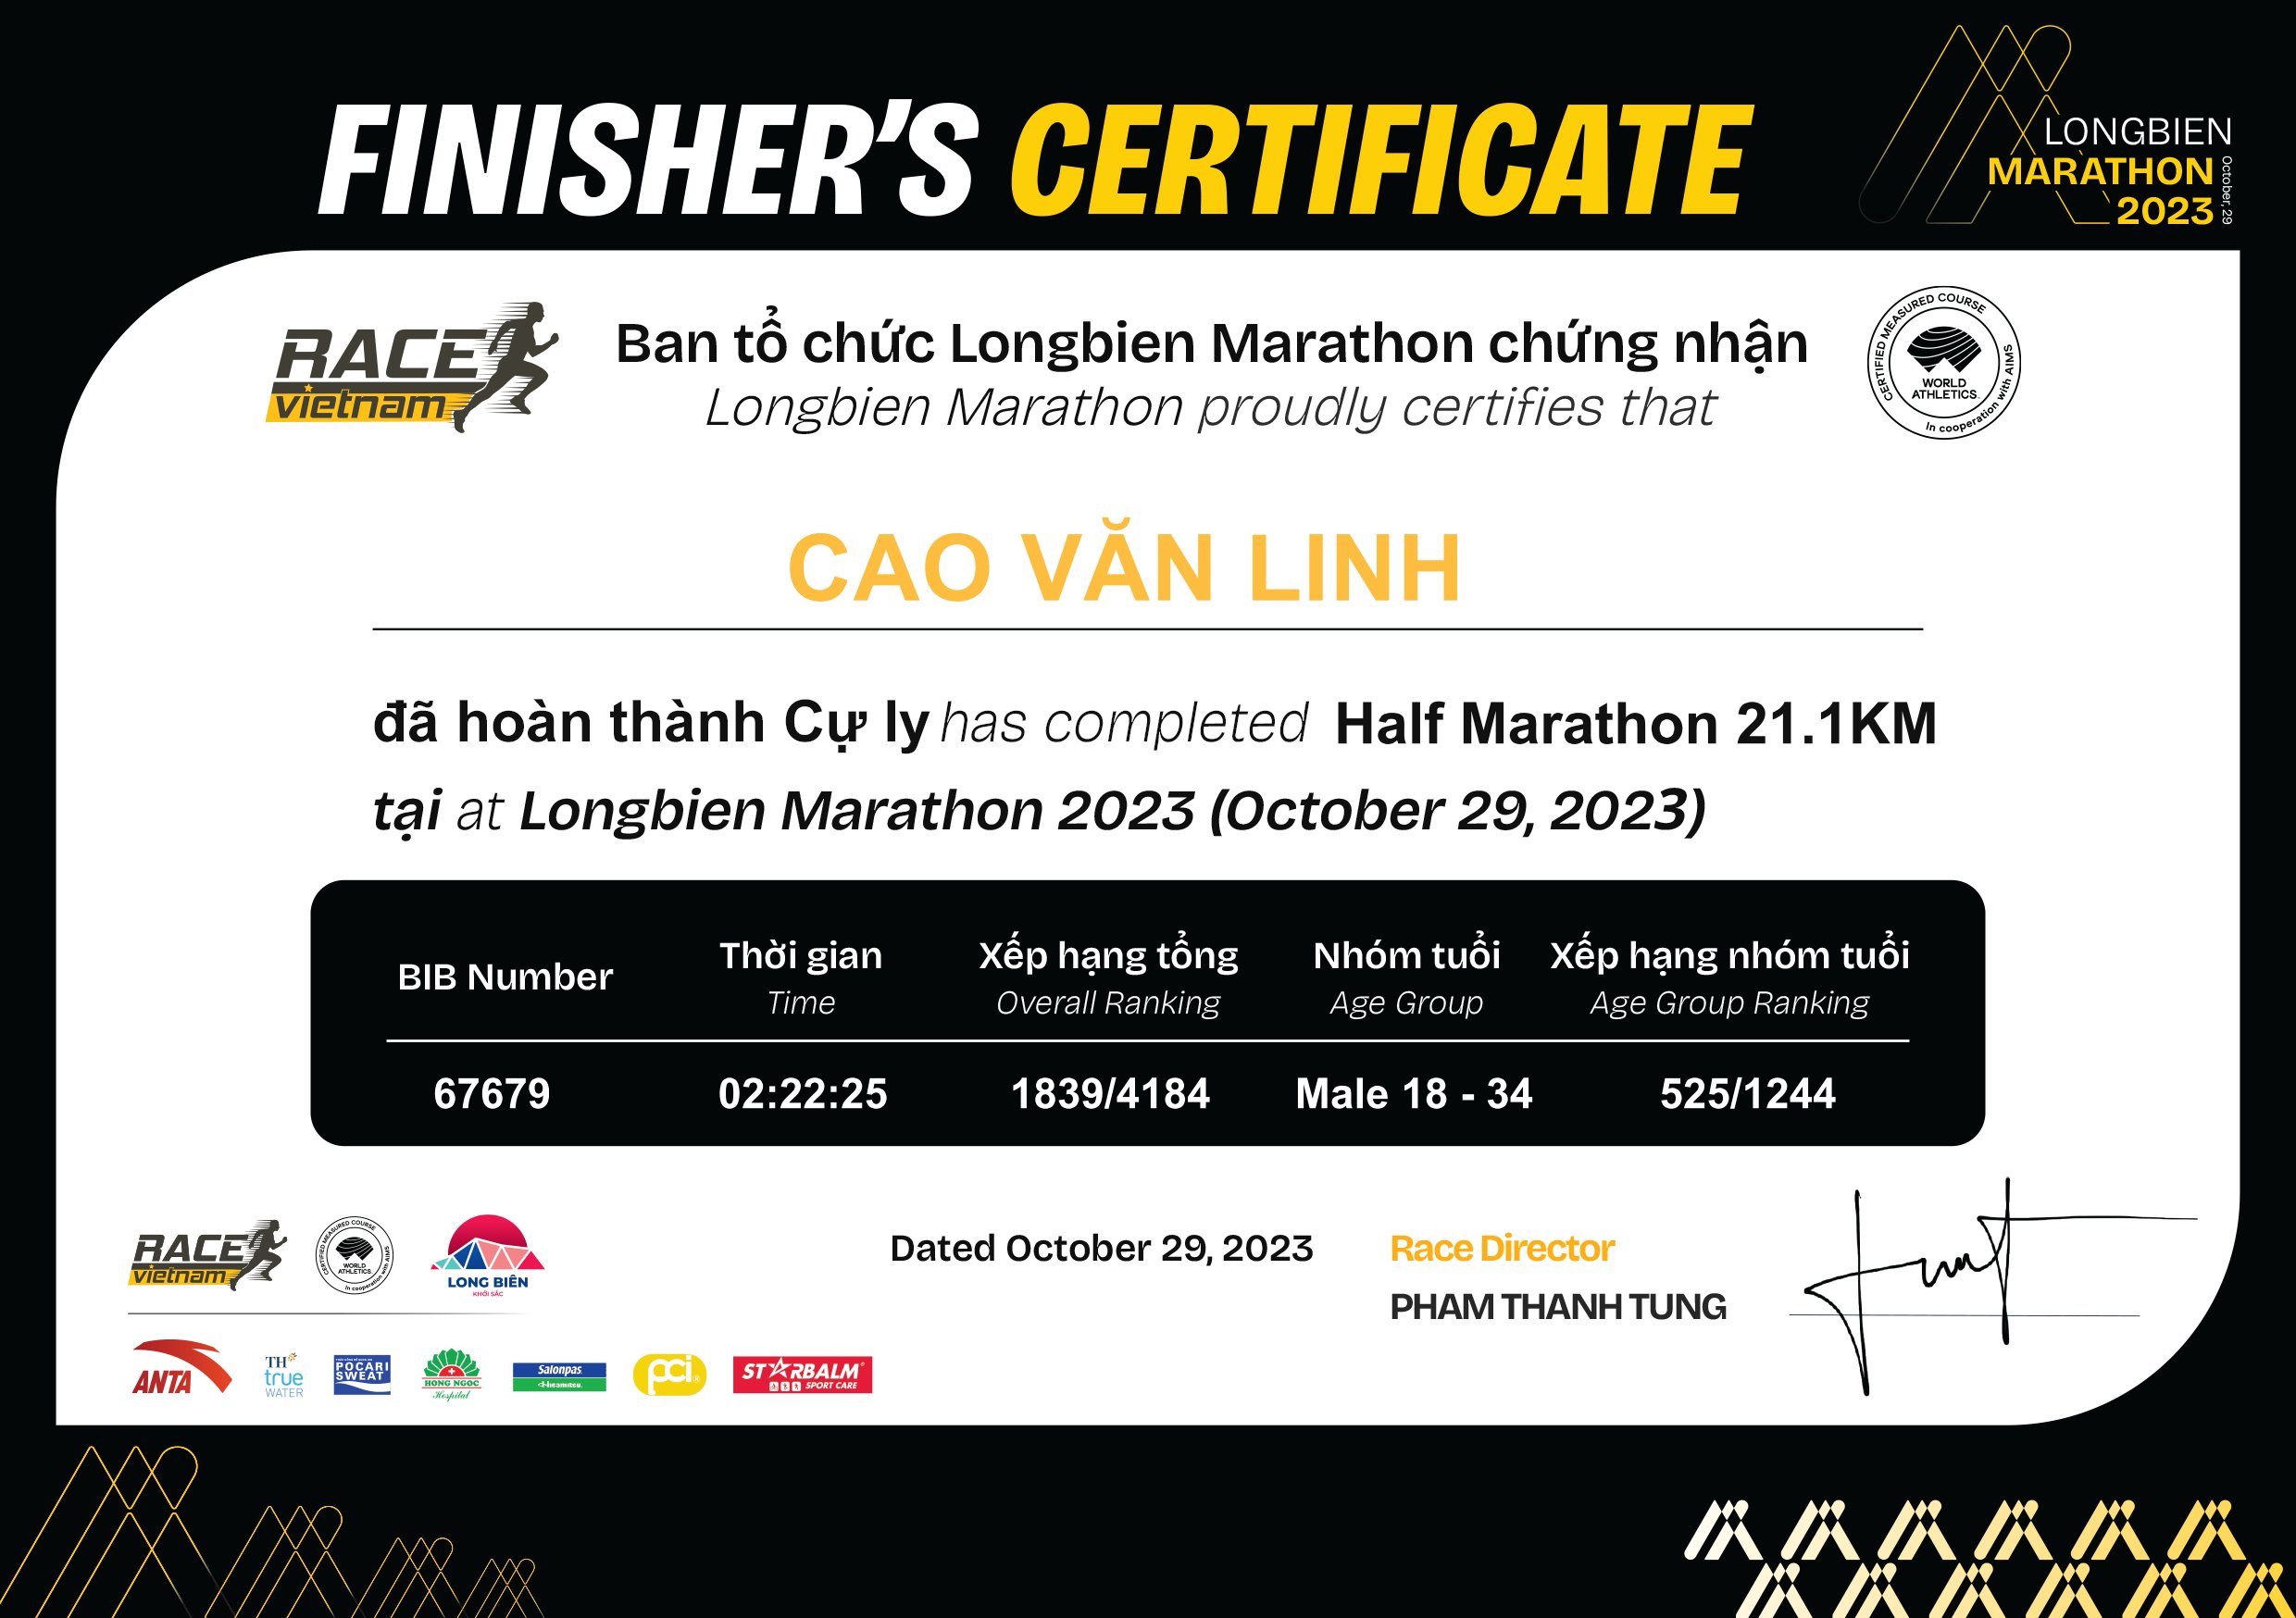 67679 - Cao Văn Linh